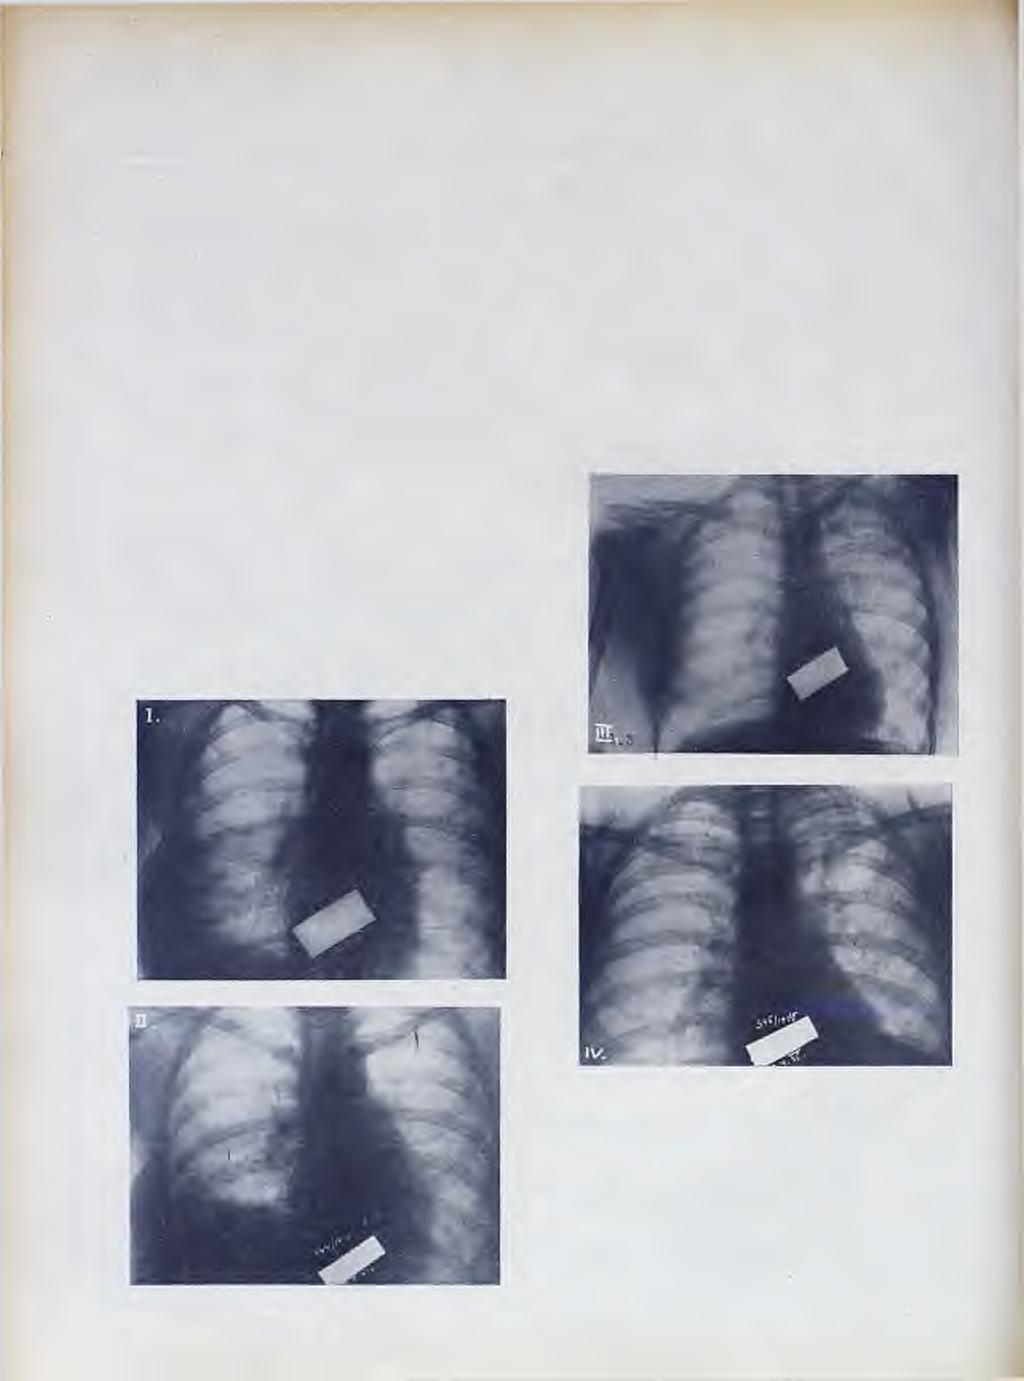 466 Bronhijalno disanje nad kavernom poslije operacije prešlo u hrapavo vezikularno. Rentgenološki velika kaverna iščezla (vidi rentgenogram br. 3 i br. 4).